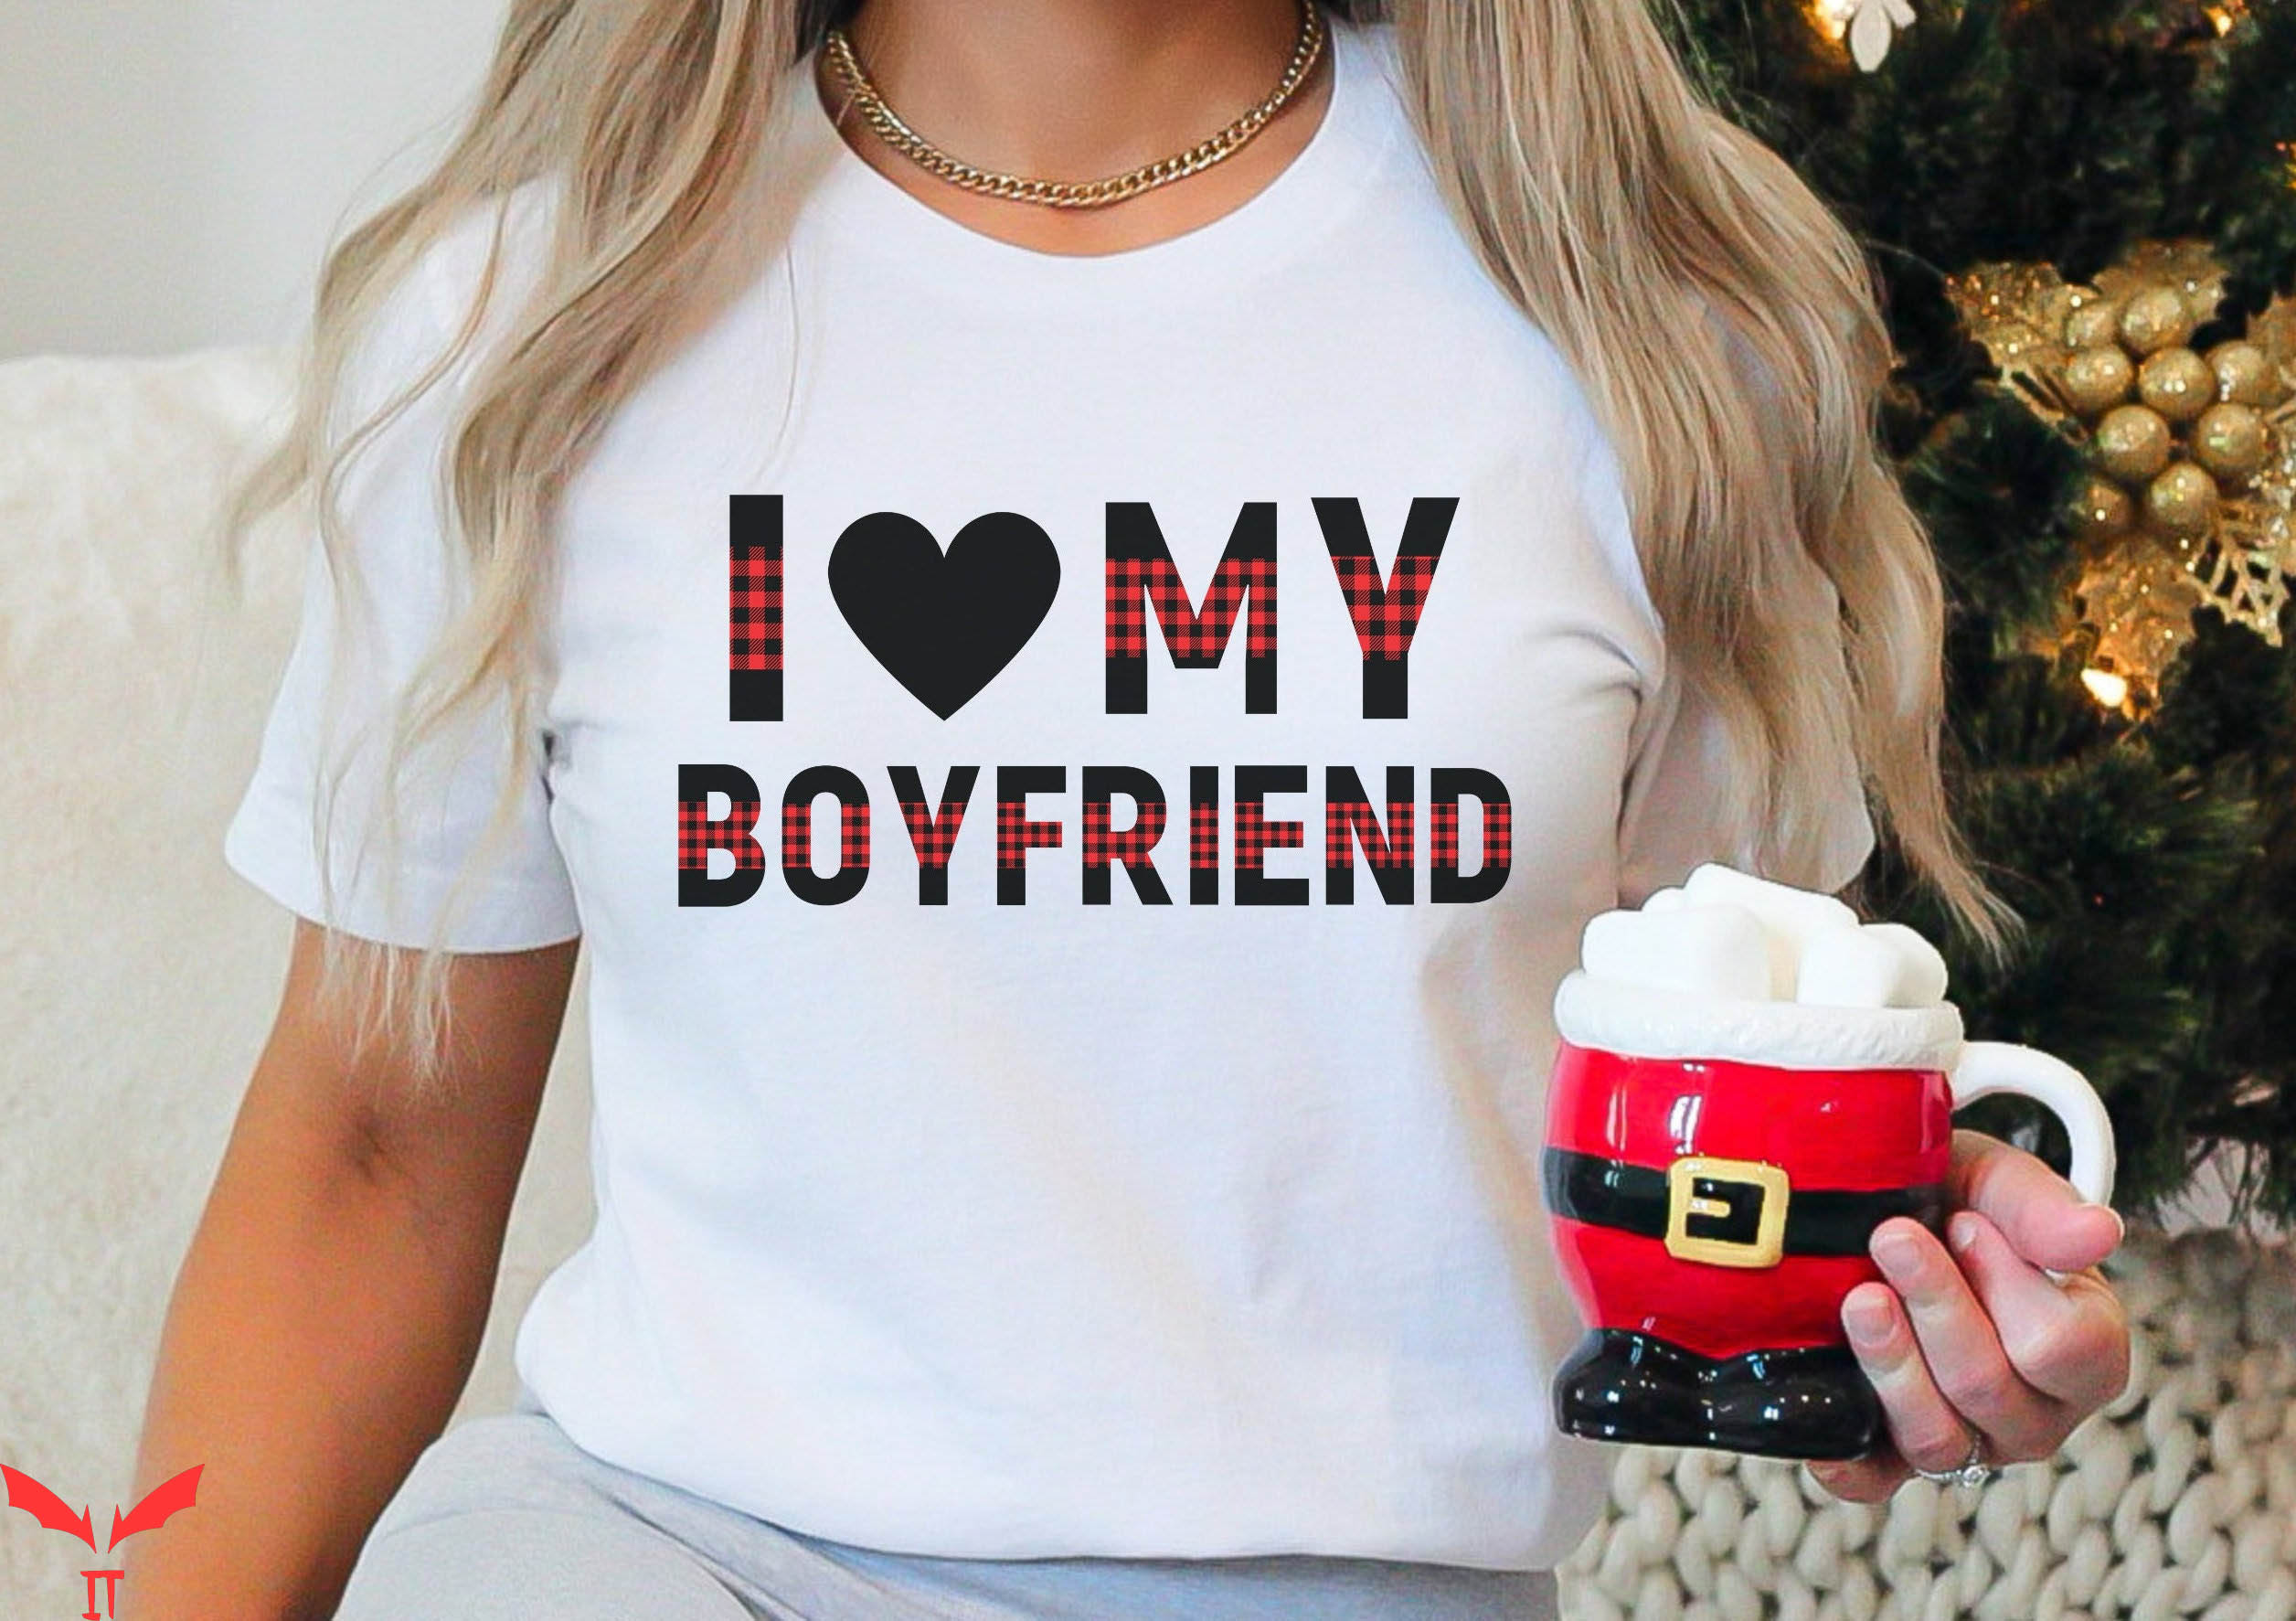 I Heart My BF T-Shirt I Love My BF Valentine's Day Tee Shirt